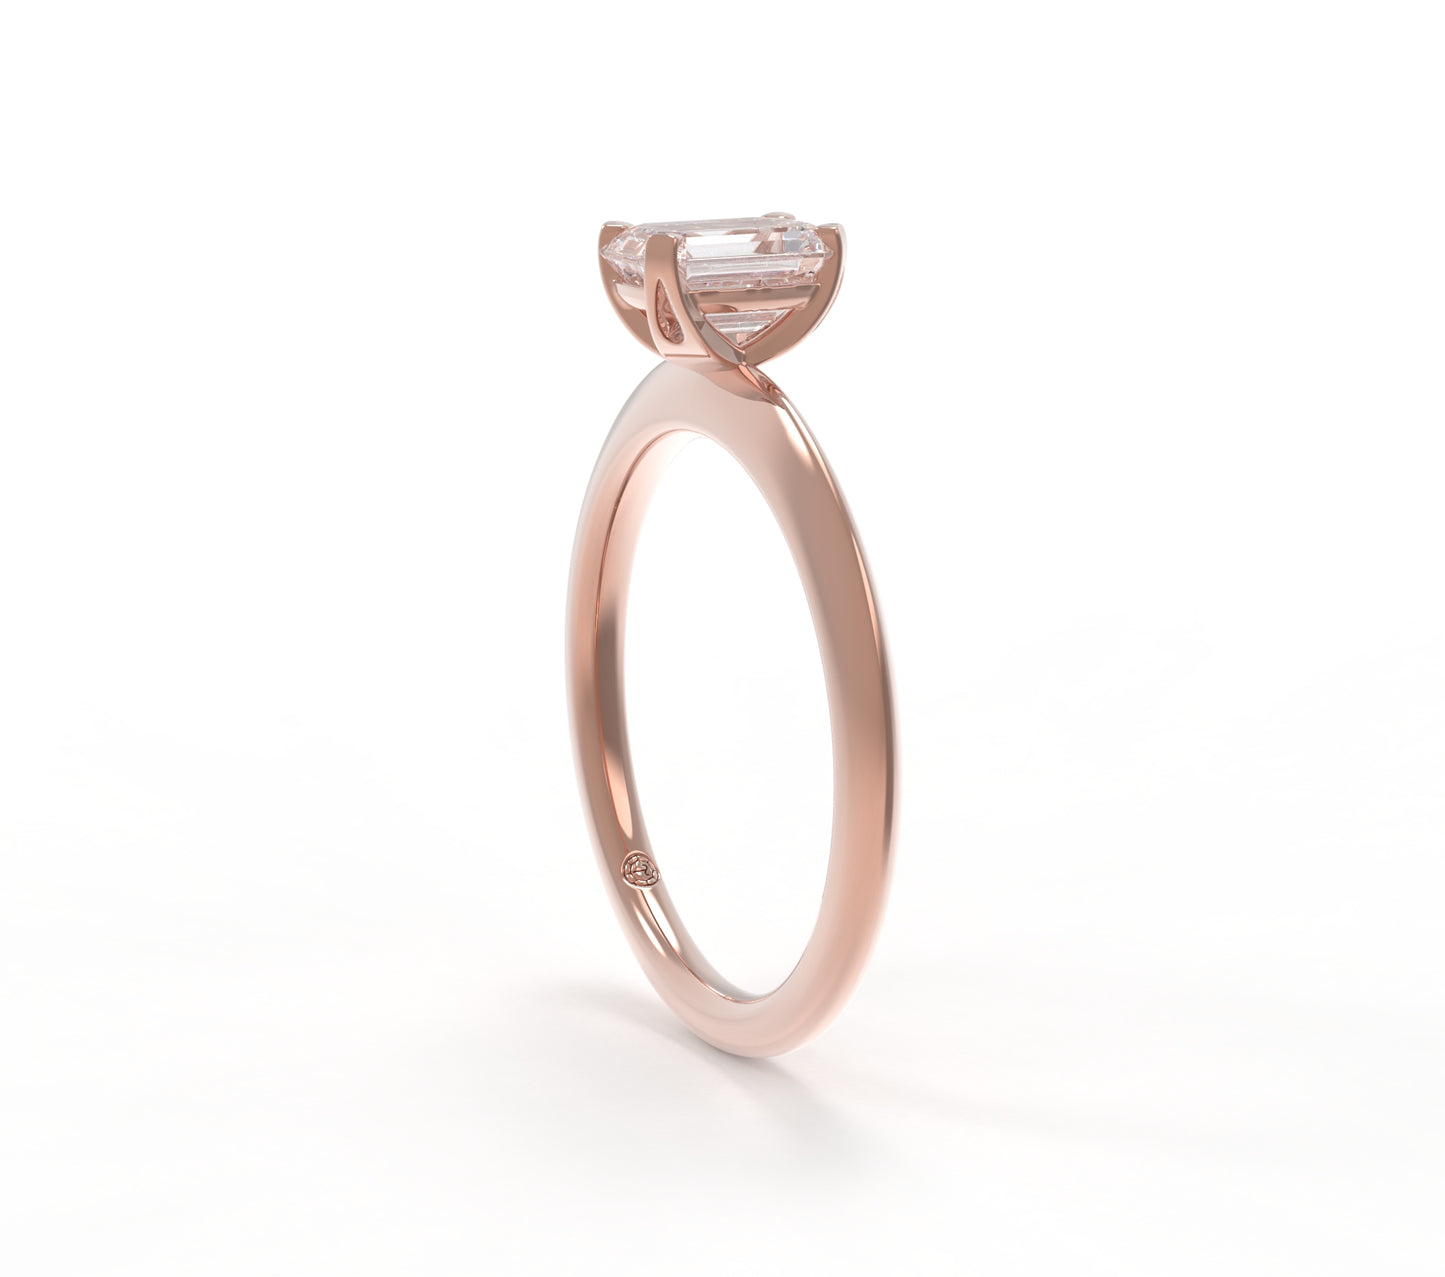 $1k 1ct Engagement Ring - Emerald Cut Diamond